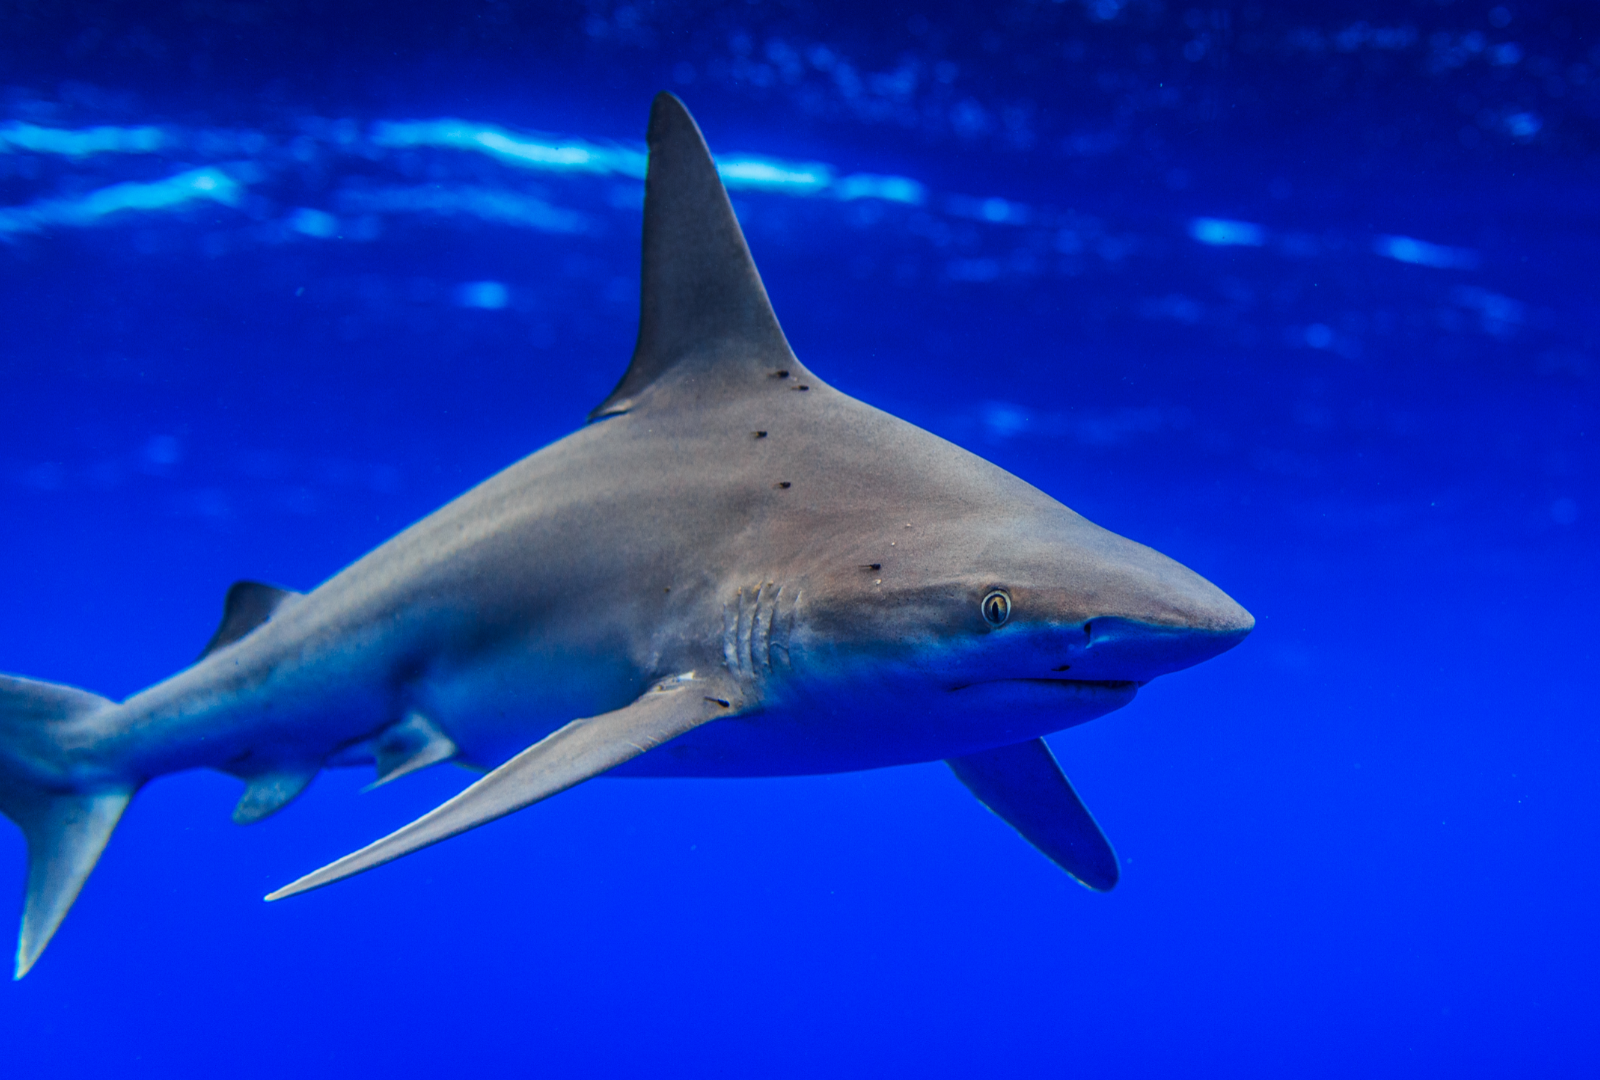 a sandbar shark swimming at the surface of the blue ocean